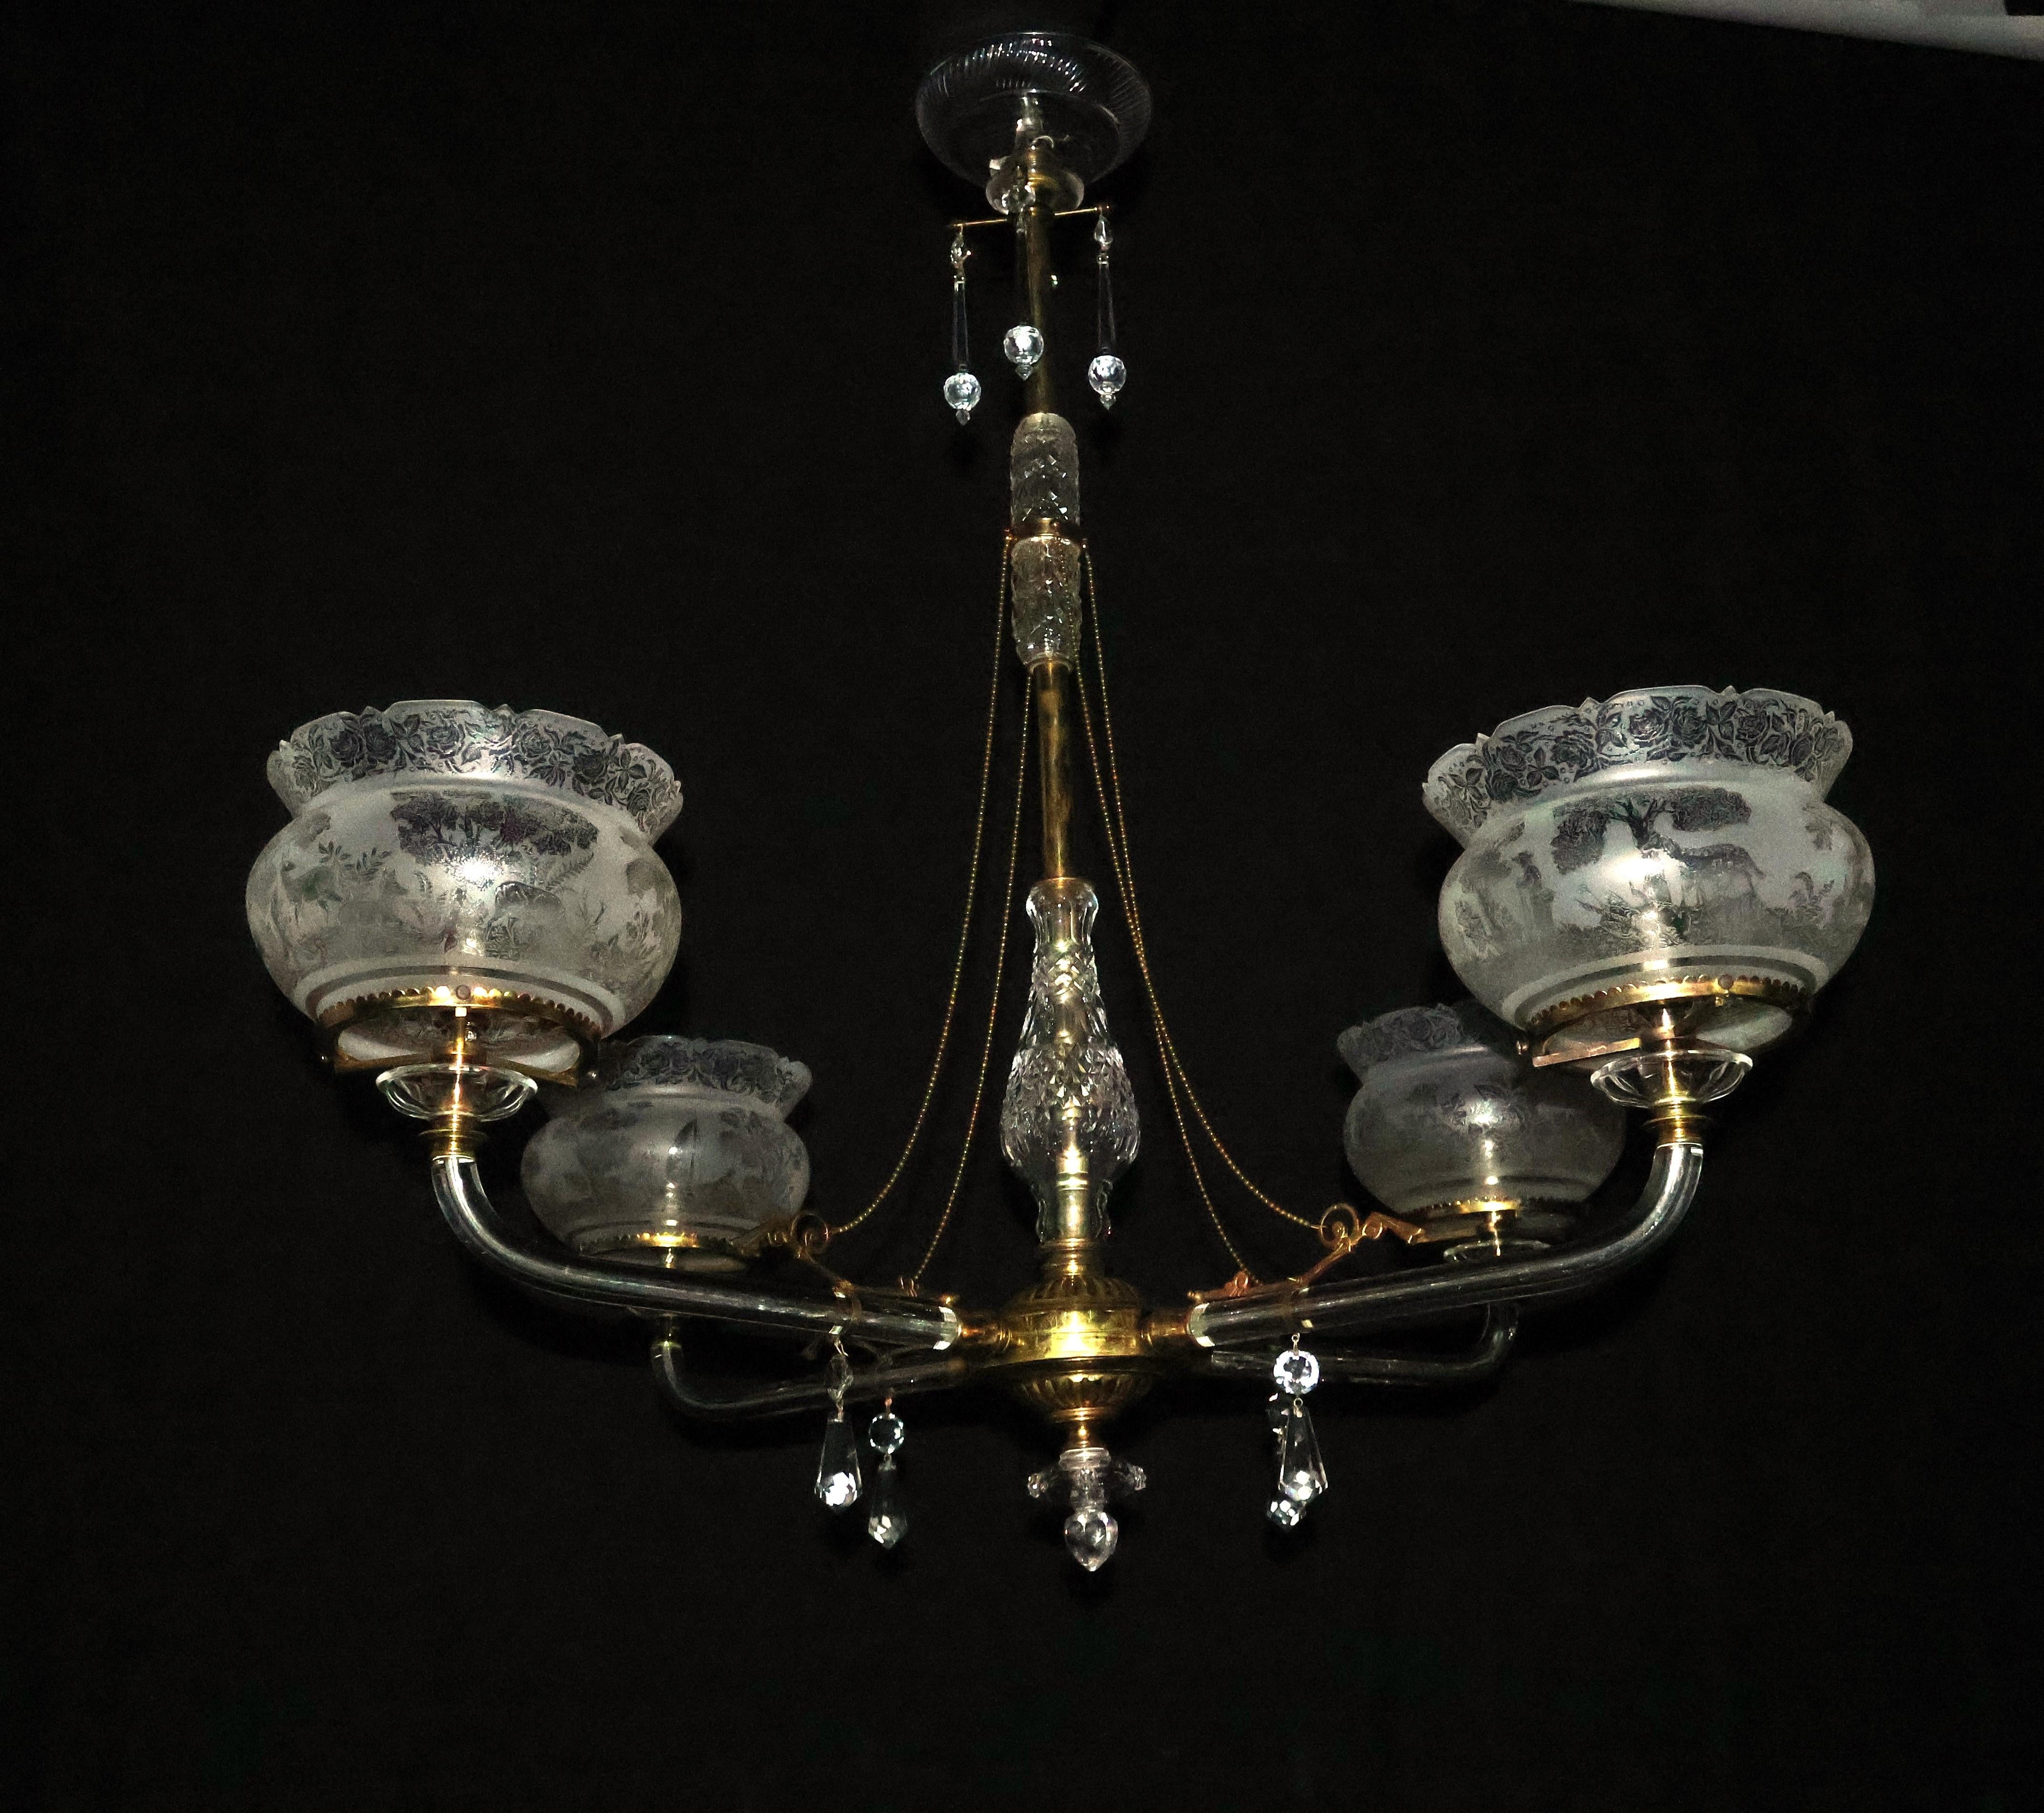 A Very Fine & Elegant Gilt Bronze & Crystal Gasolier, originally for candles, now electrified. Original shades. 4 lights. England, circa 1860.
Dimensions: Height 39